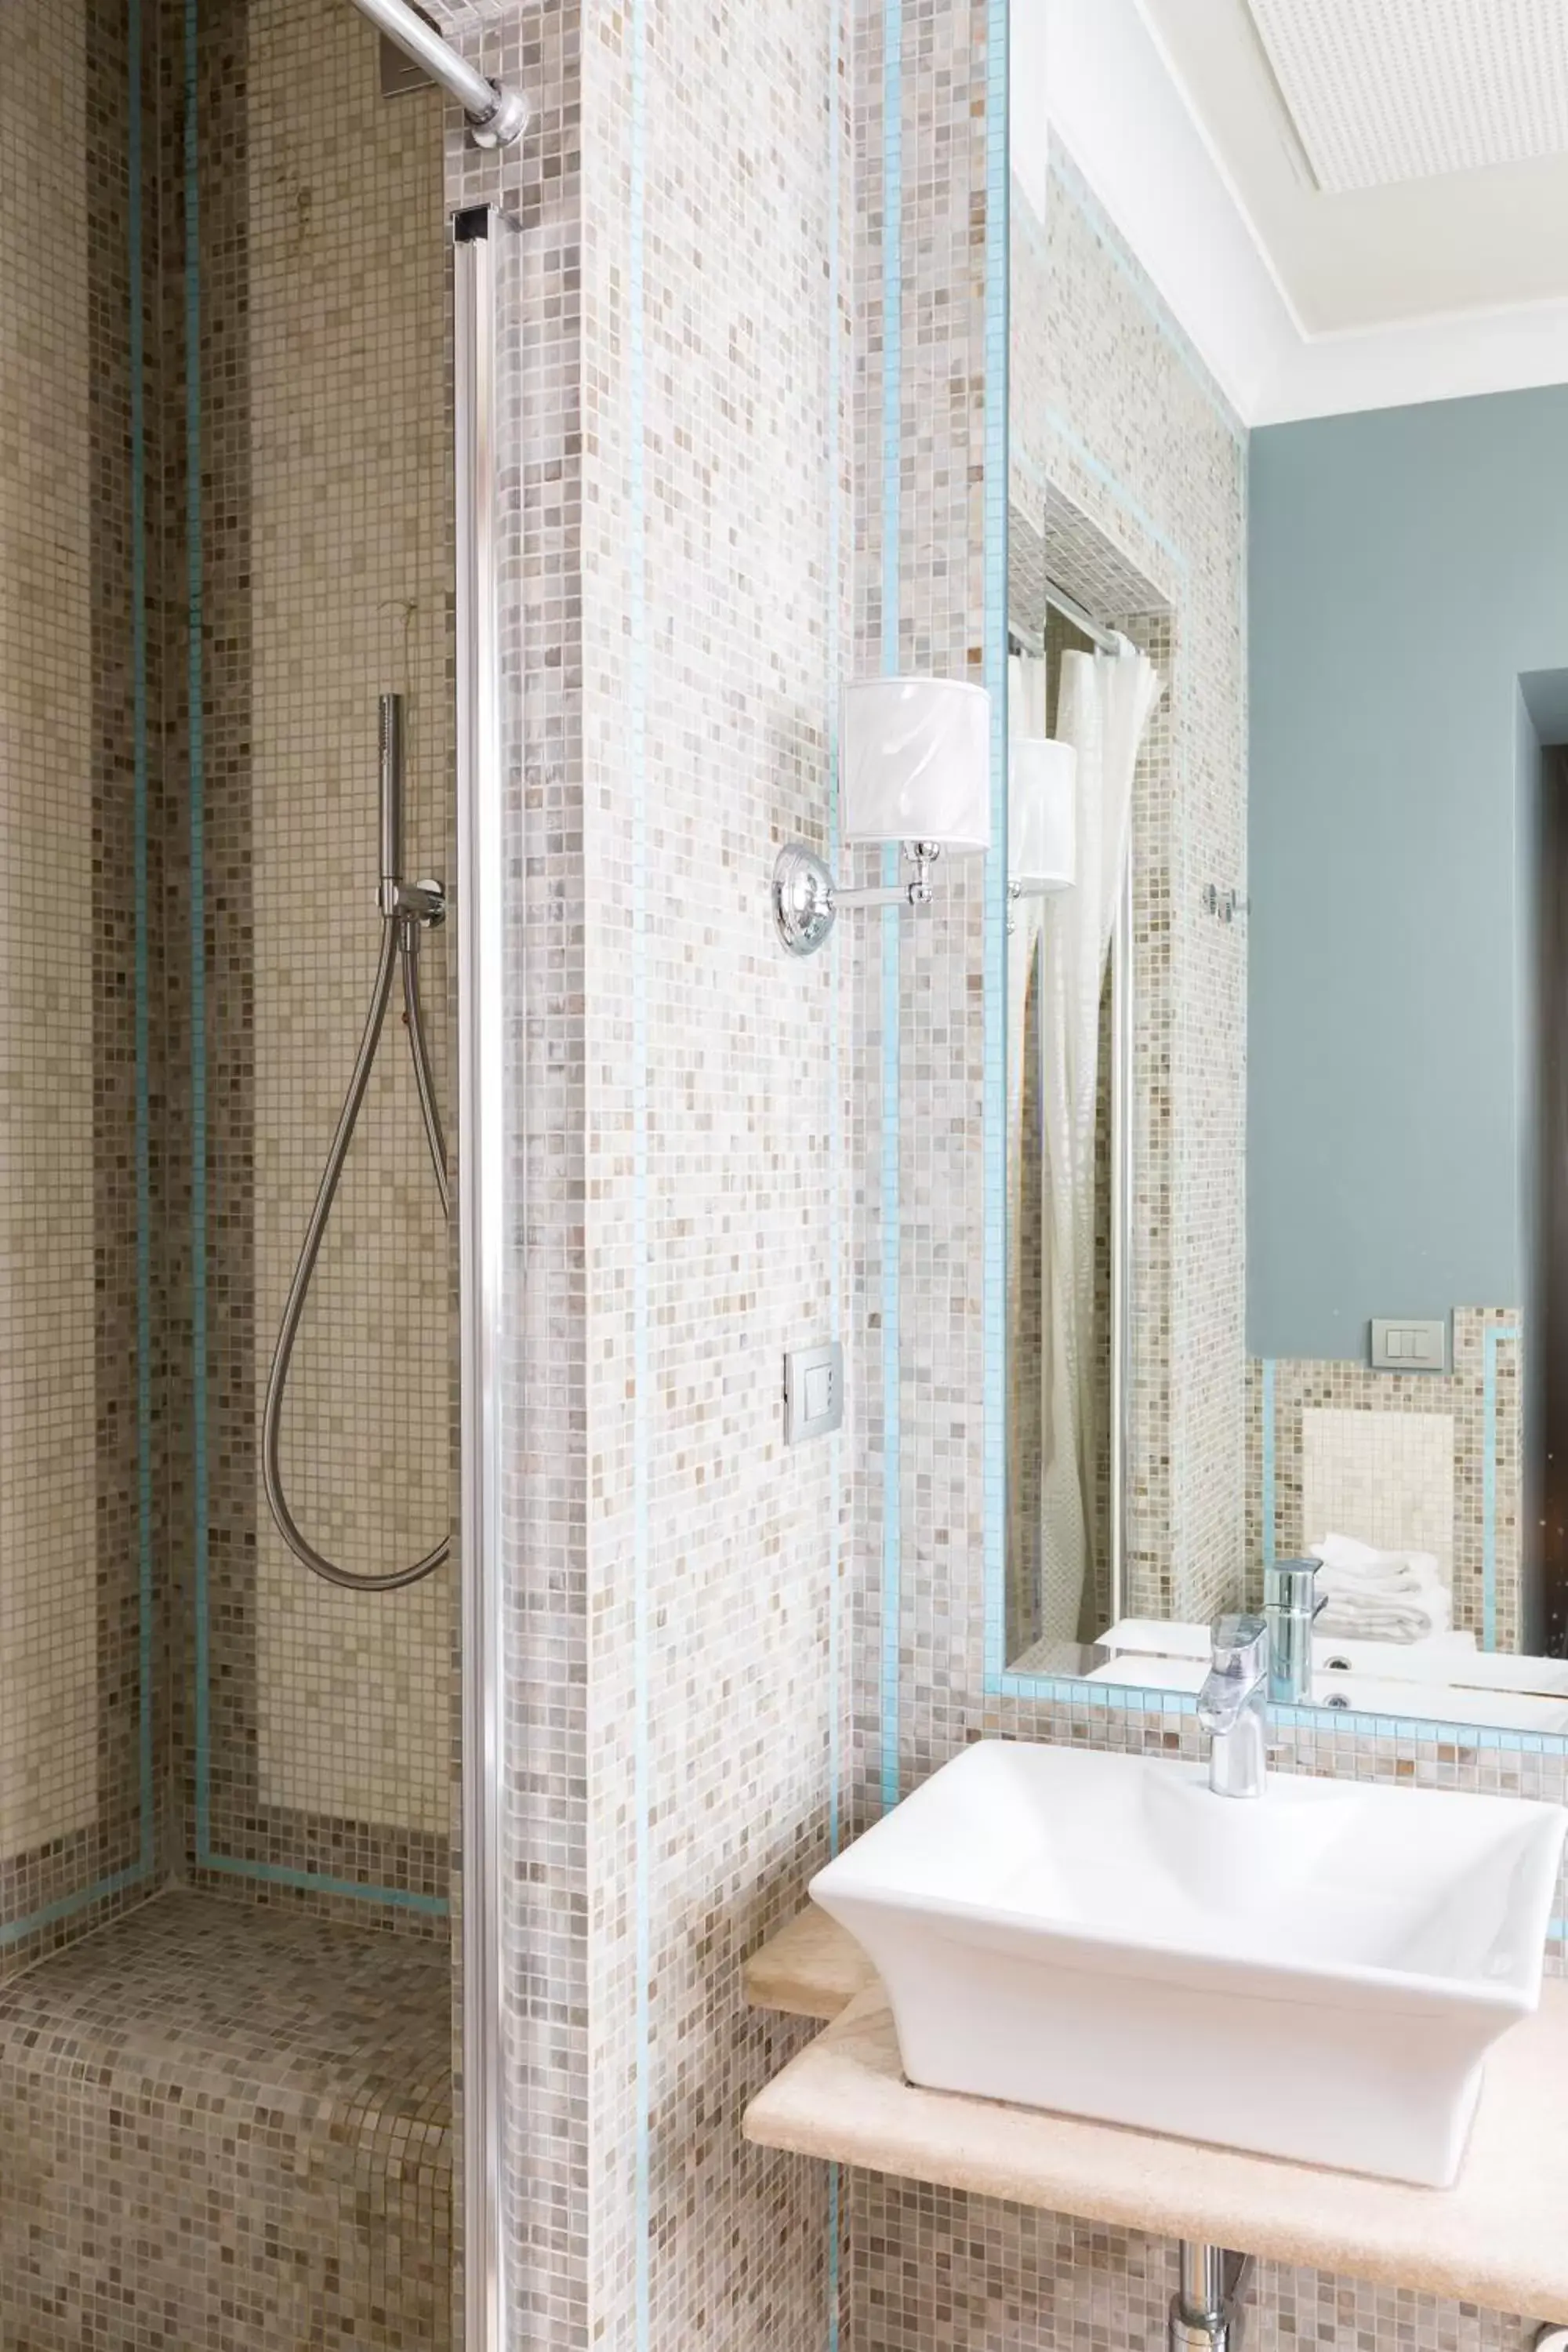 Decorative detail, Bathroom in Rooms Roma - Monti